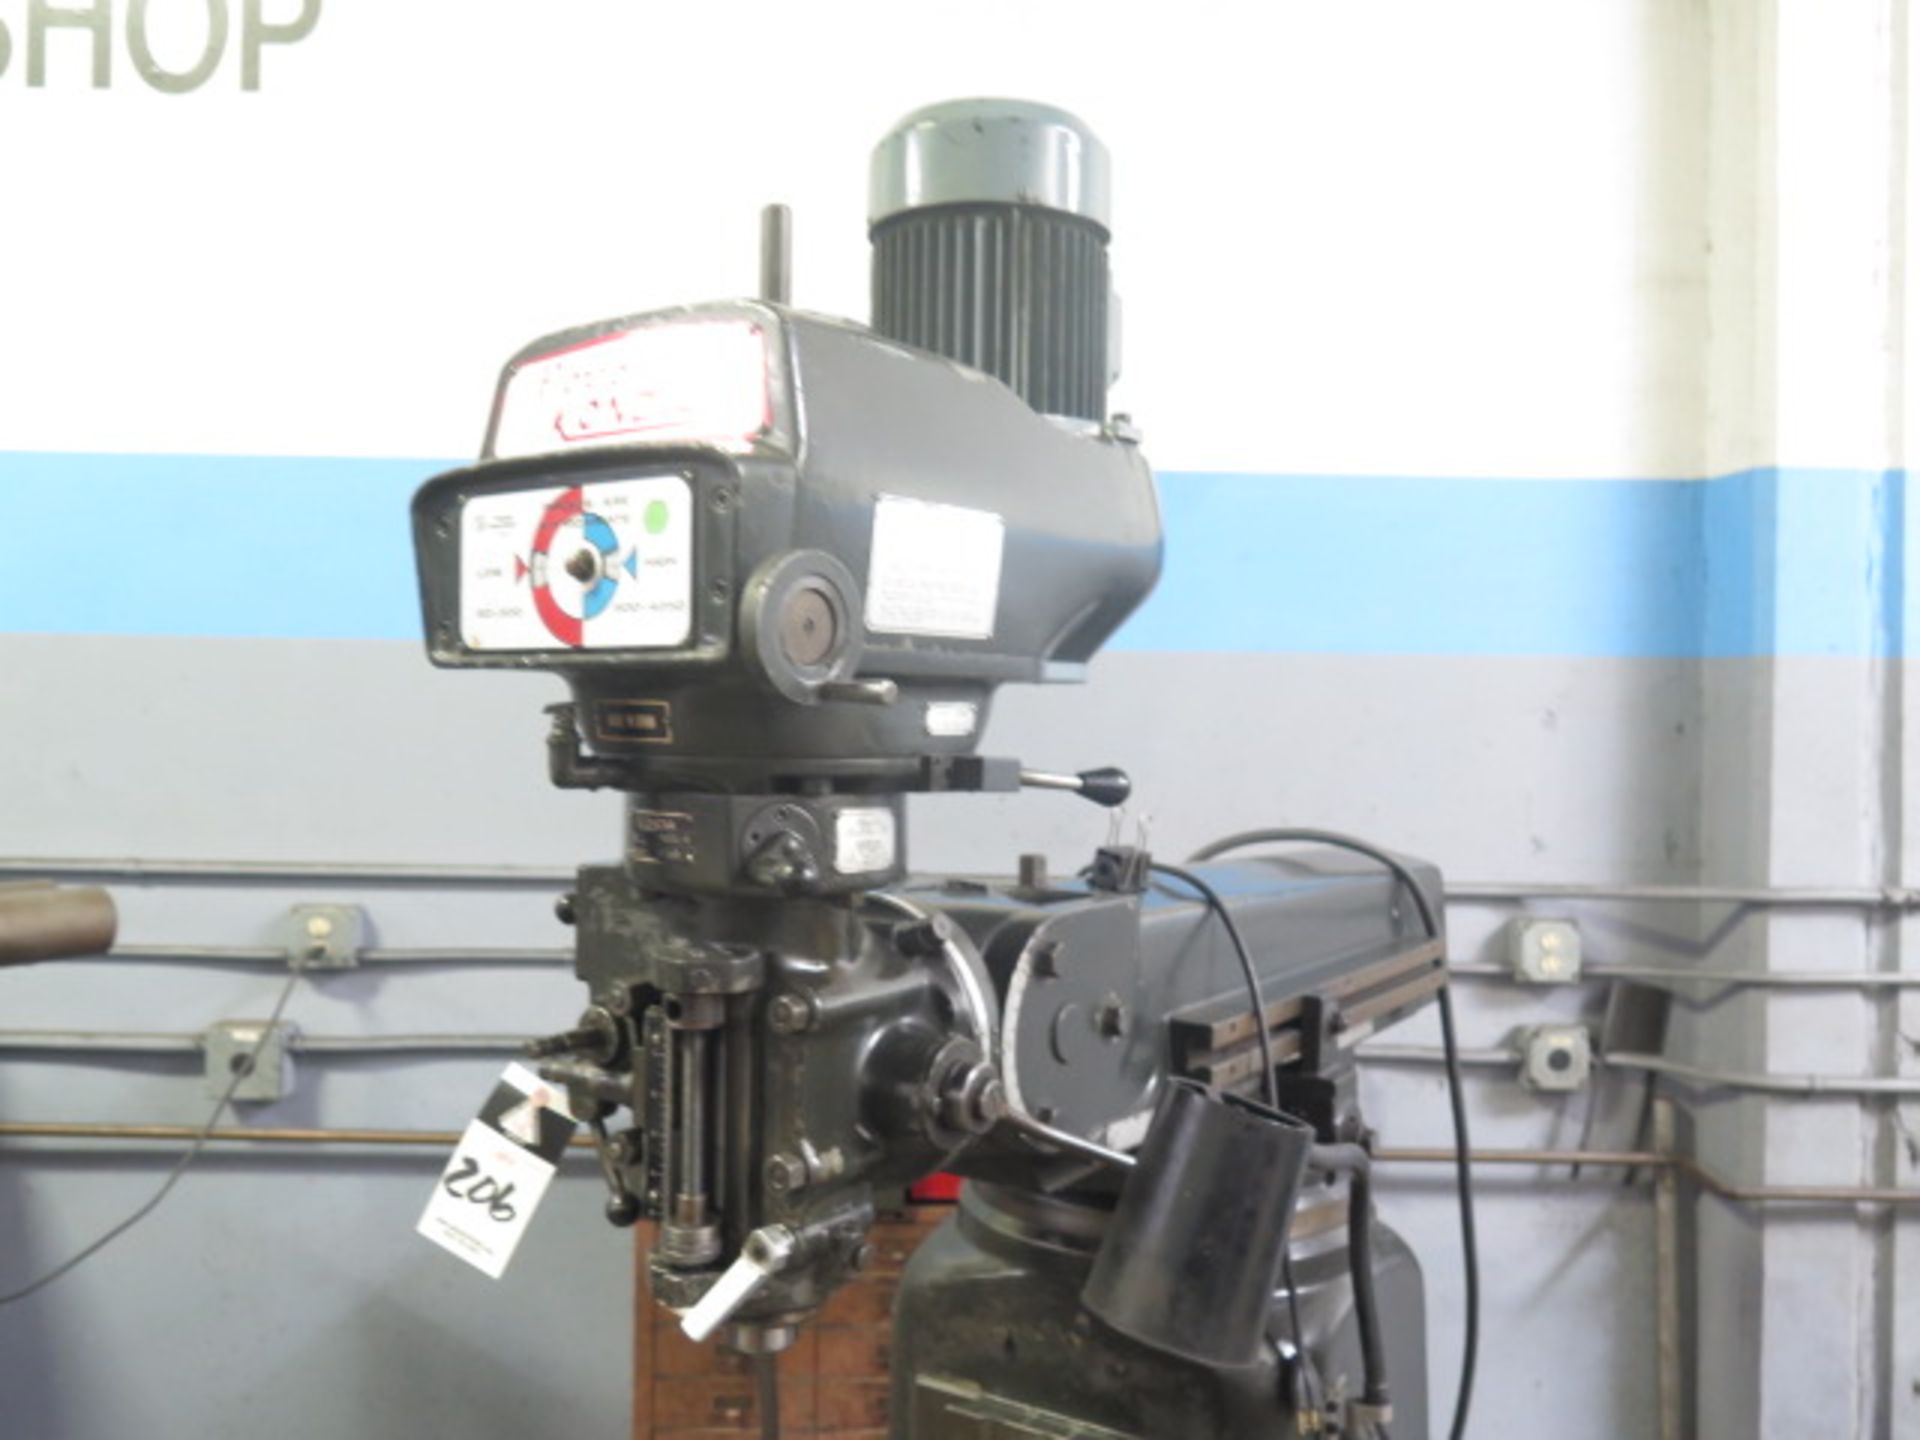 Kondia Power Mill mdl. G s/n F-398 w/ 2.2kw Motor, 60-4200 Dial Change RPM, Power Feed, 9” x 42” - Image 3 of 7